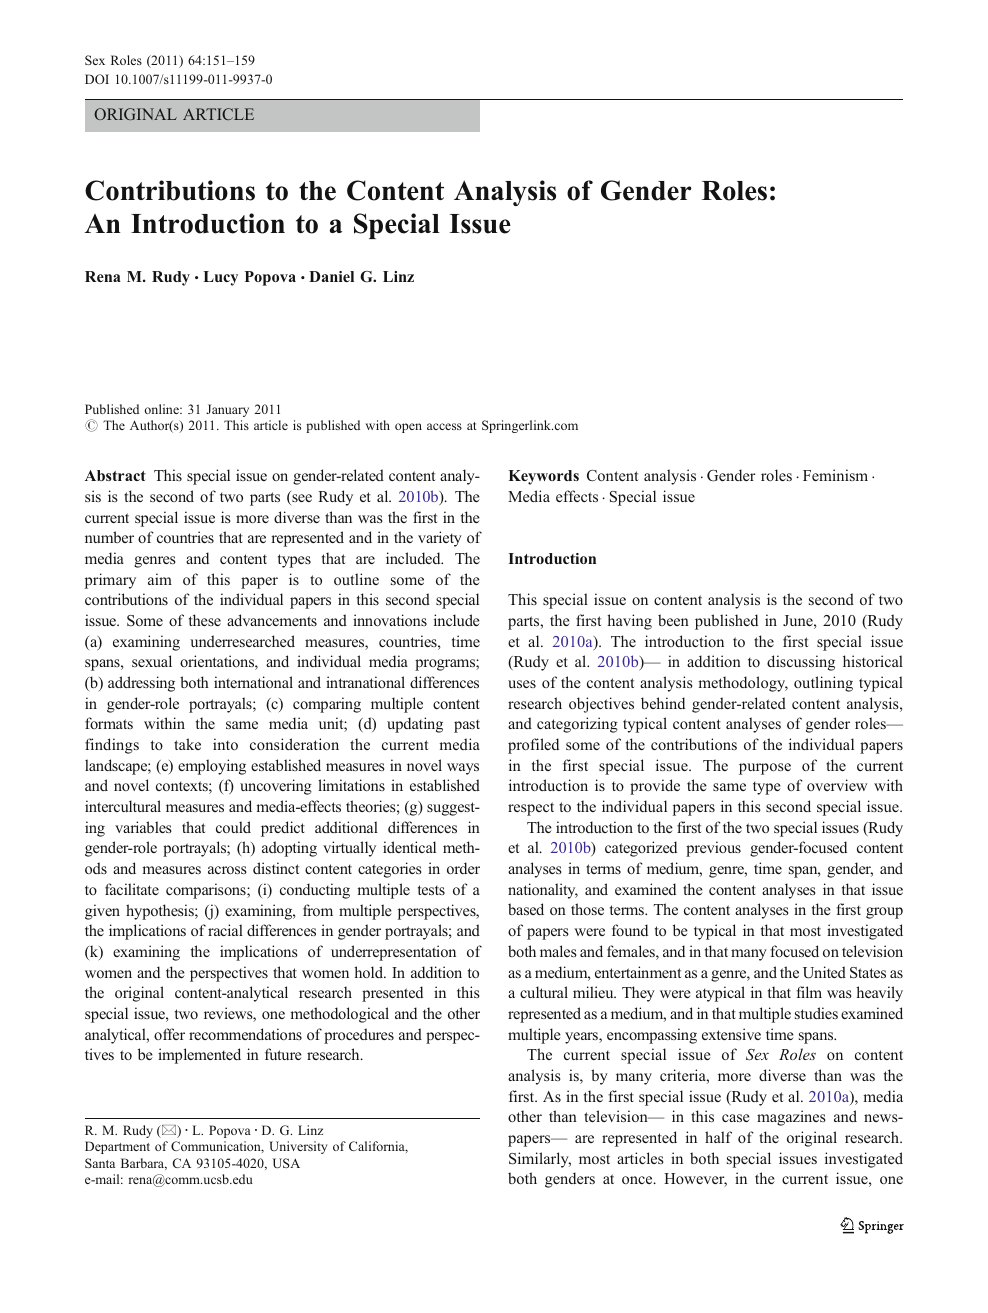 gender roles paper